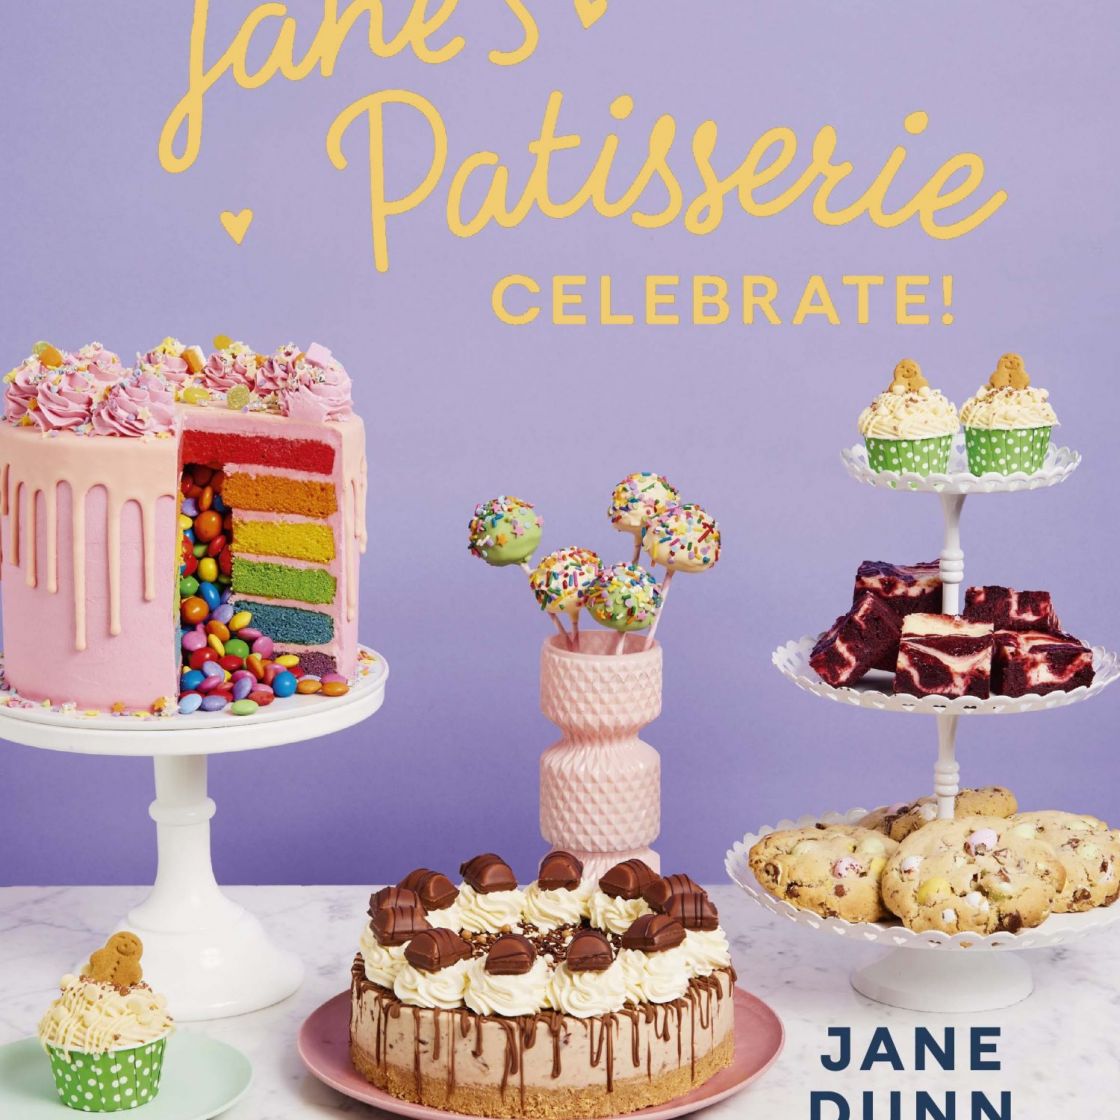 My Favourite Cake Tins! - Jane's Patisserie